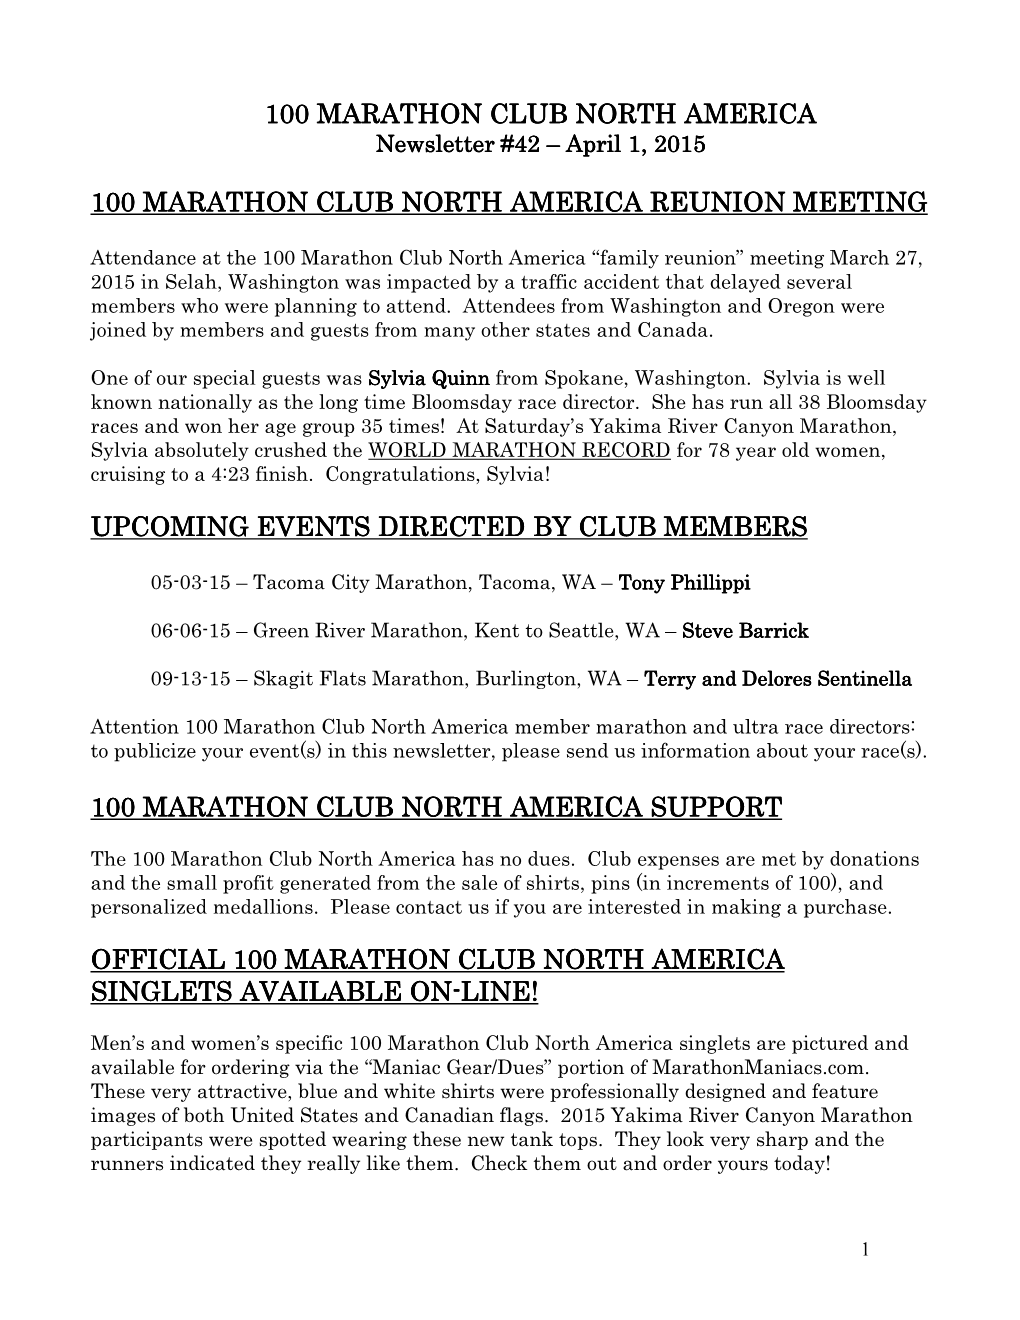 100 Marathon Club North America Newsletter #42 04-01-15